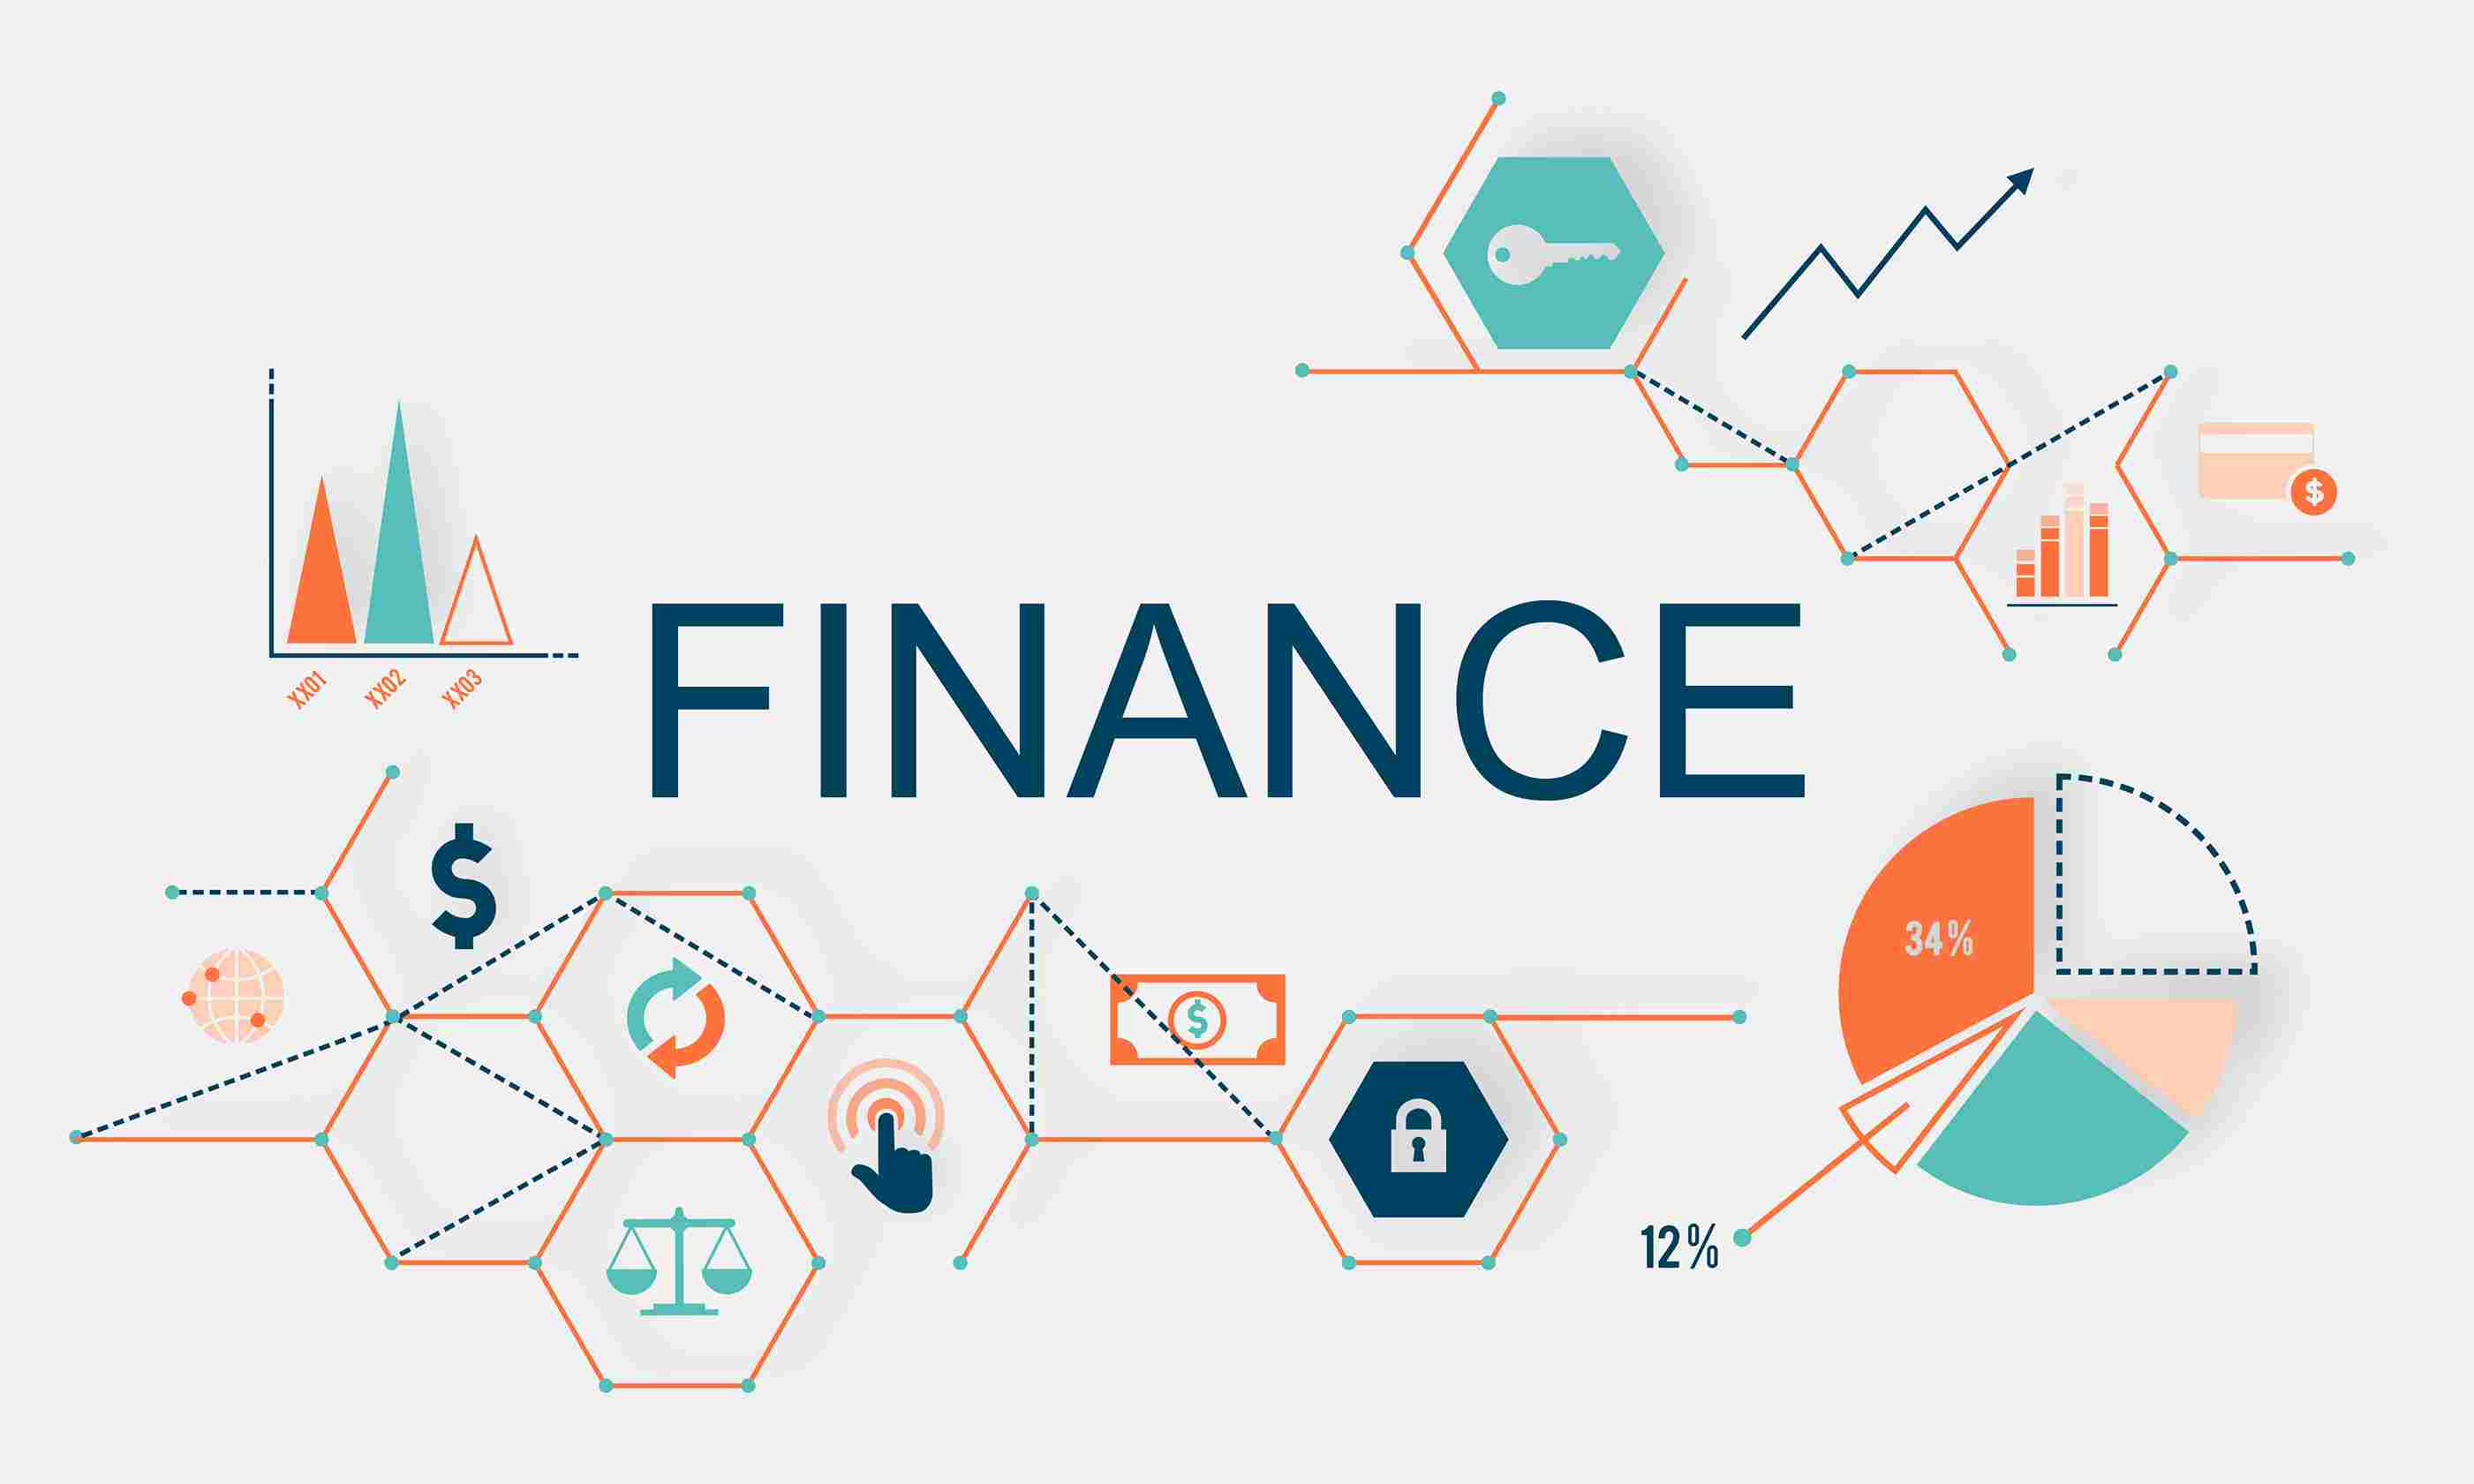 finance industry image